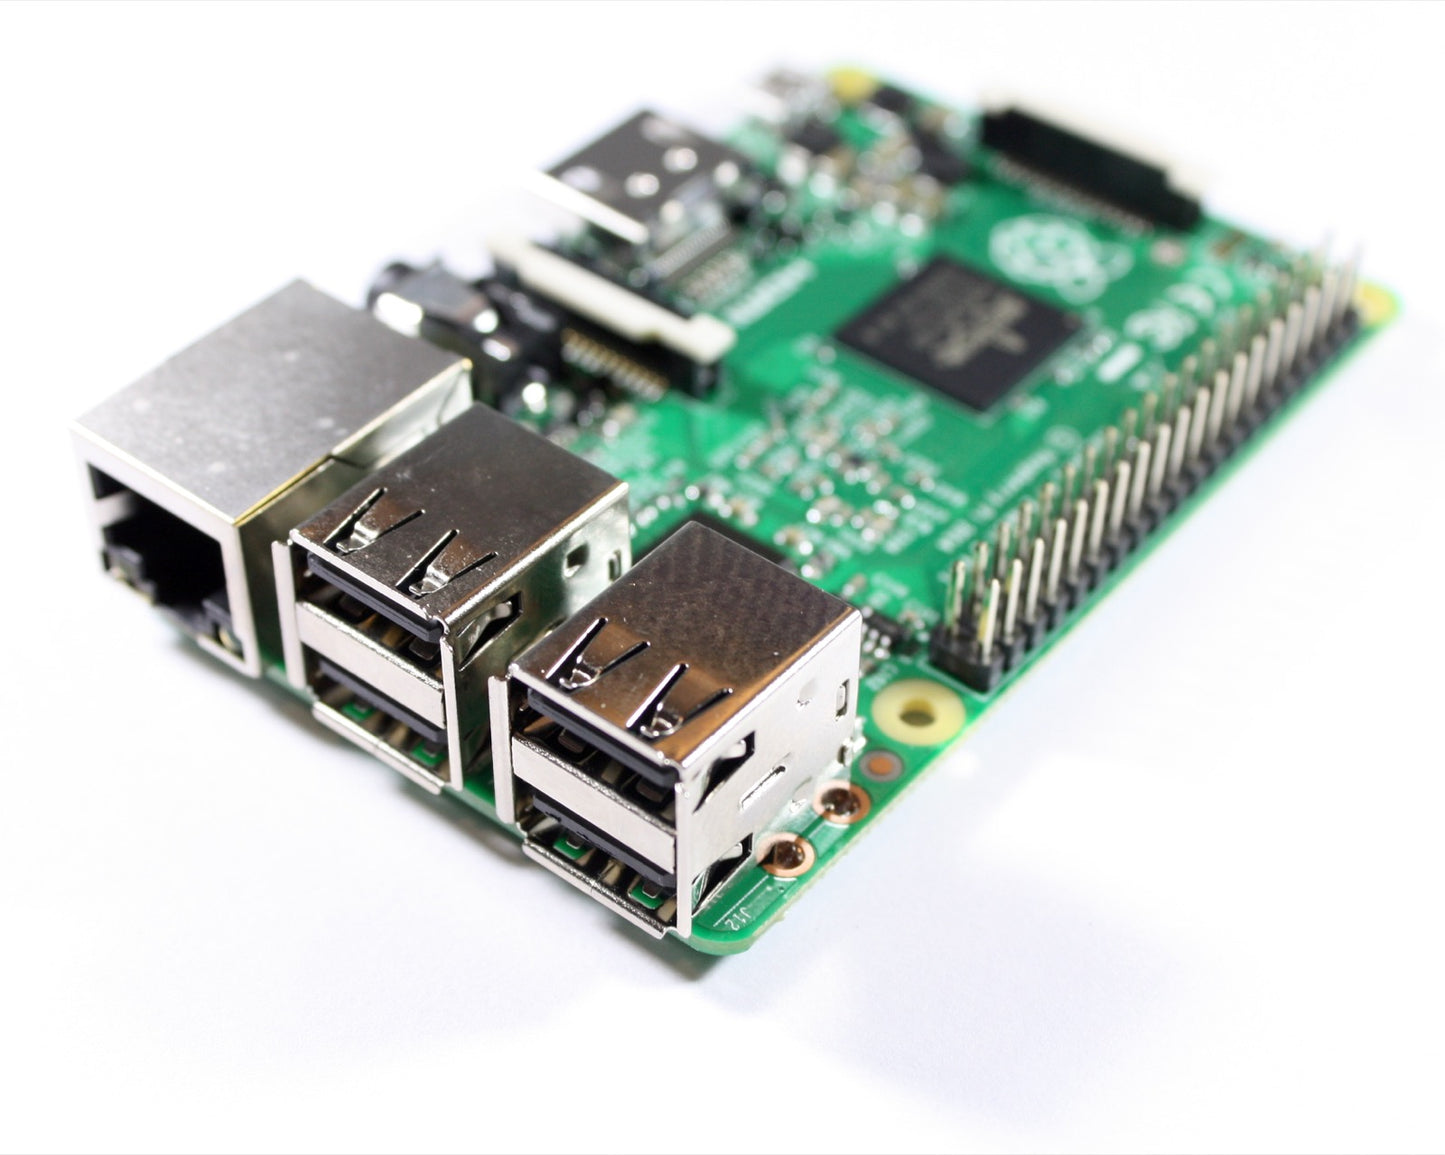 Raspberry Pi 3, Model B, 64bit 1.2 GHz Quad-Core ARMv7, WiFi, BLE, 1GB RAM, Made in UK